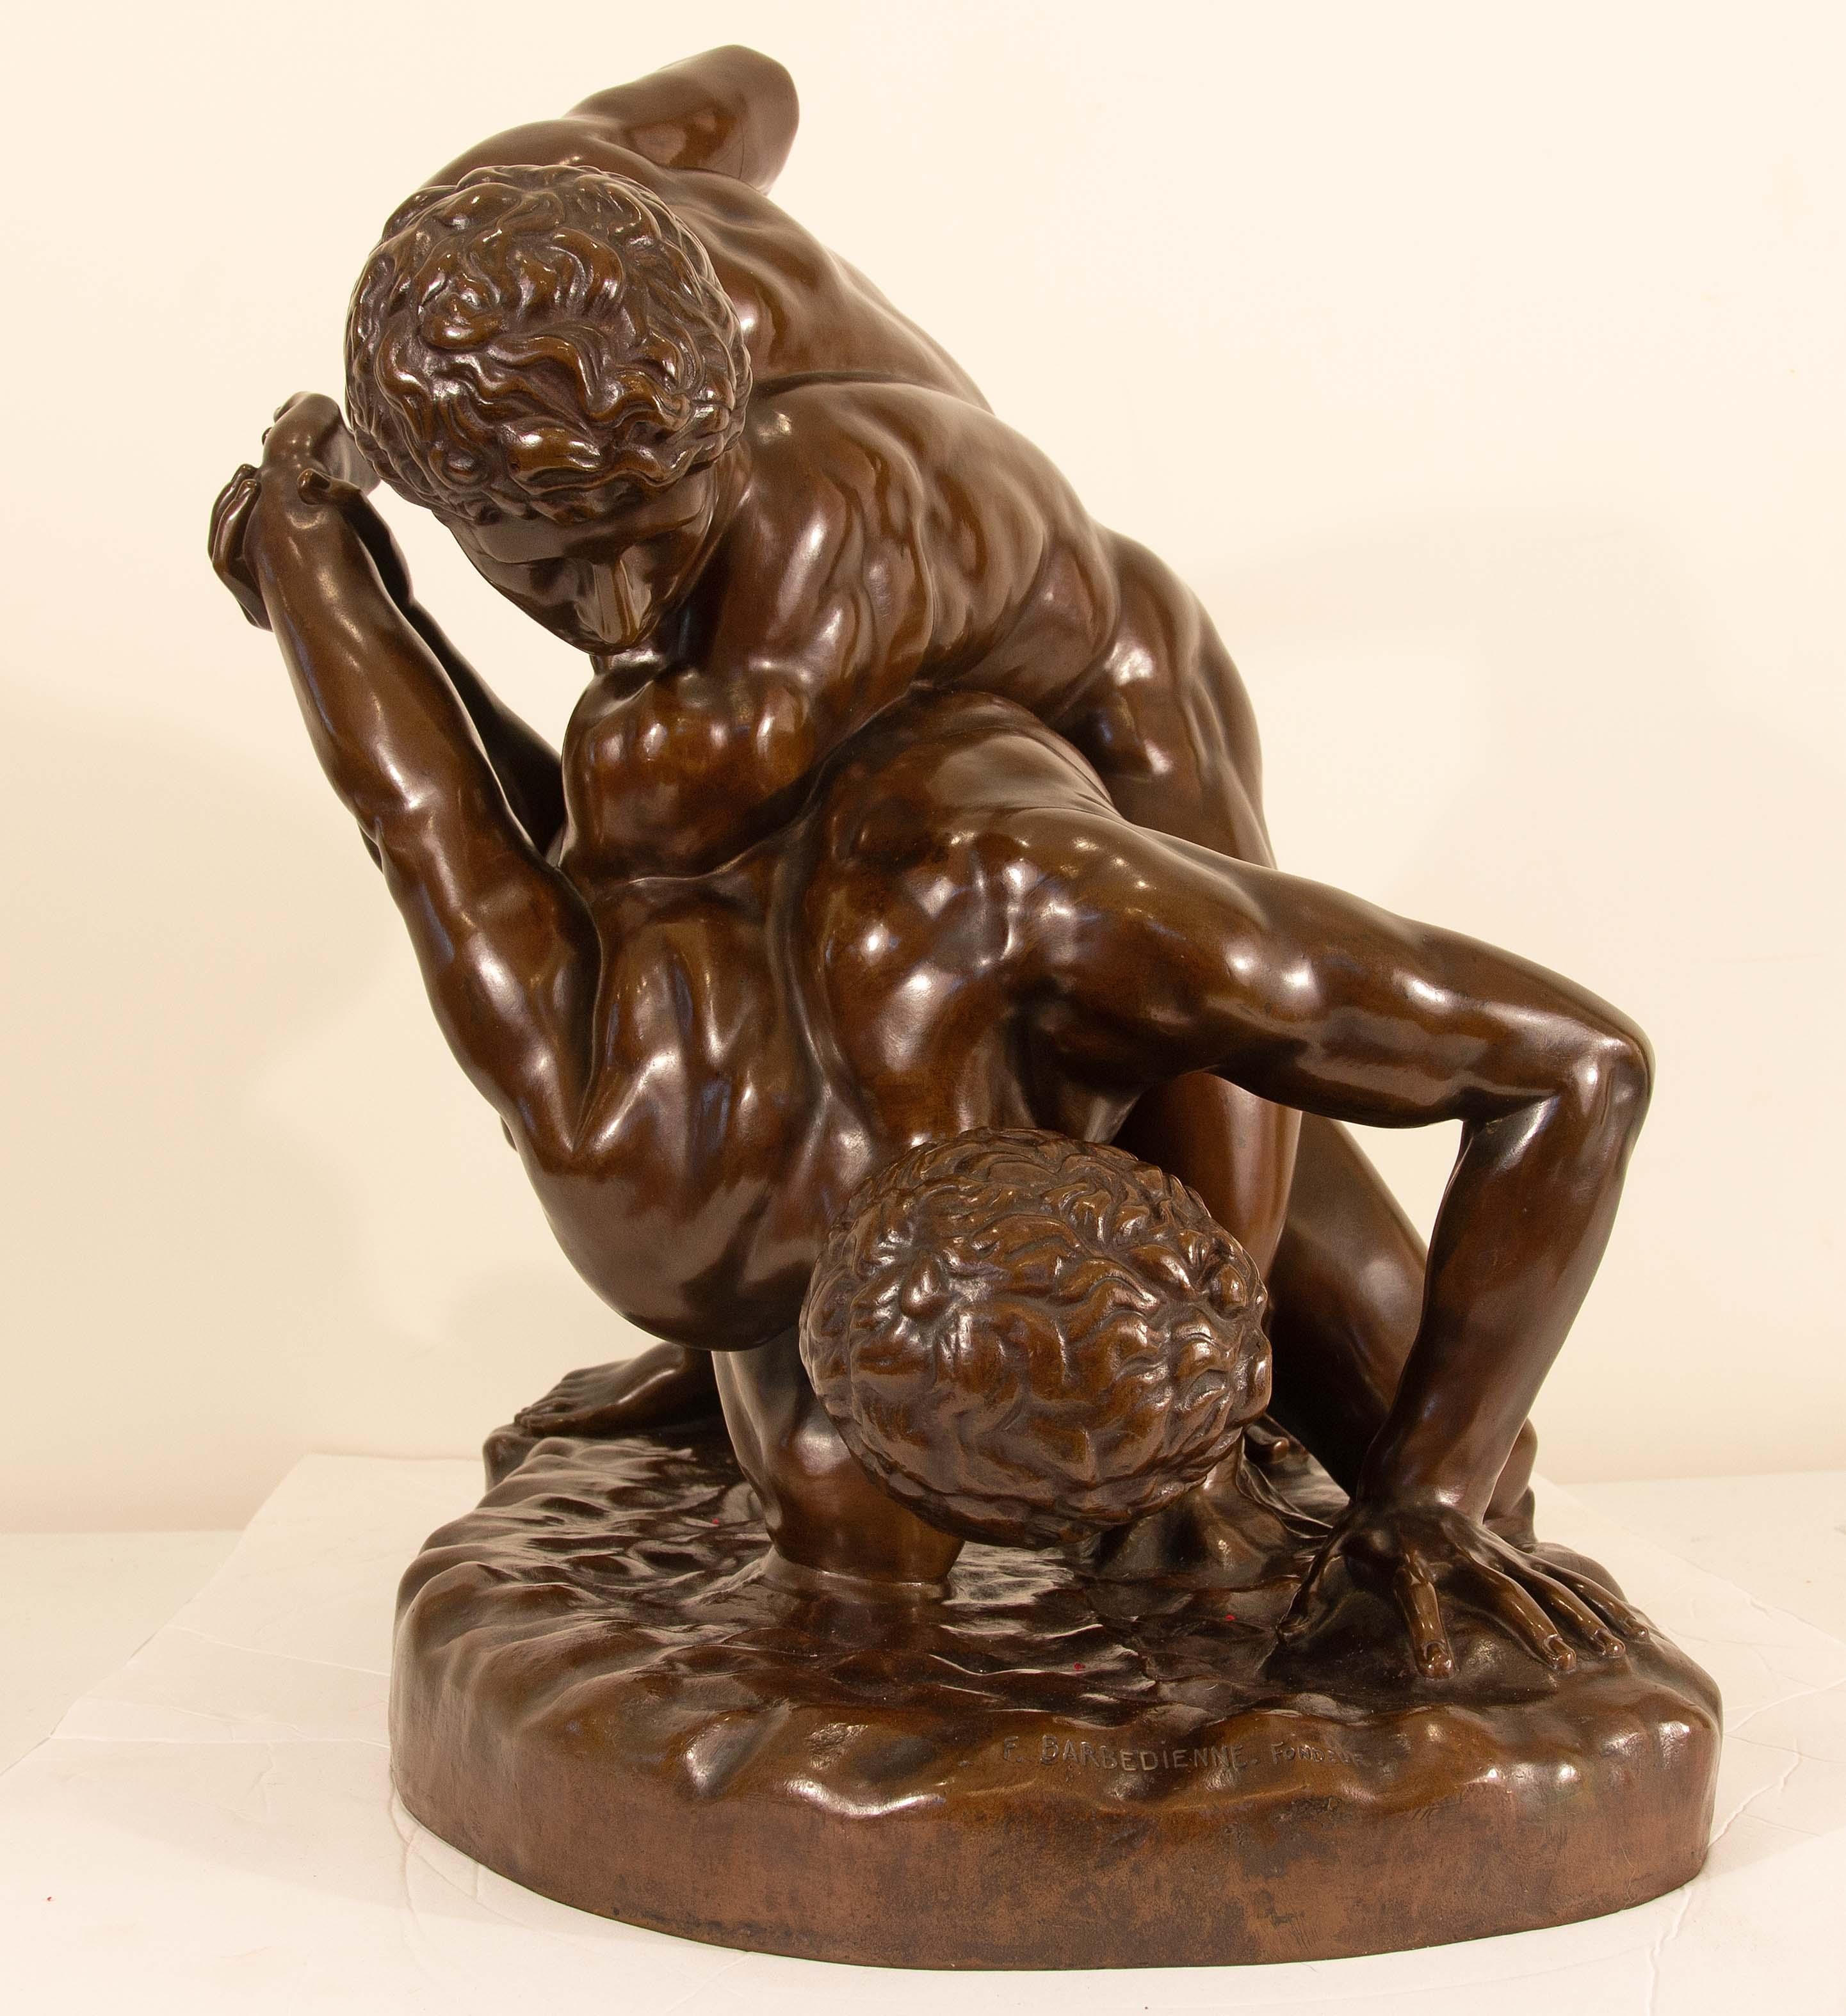 19th Century Large Grand Tour Sculpture Bronze Greco-Roman Uffizi Wrestlers Barbedienne For Sale